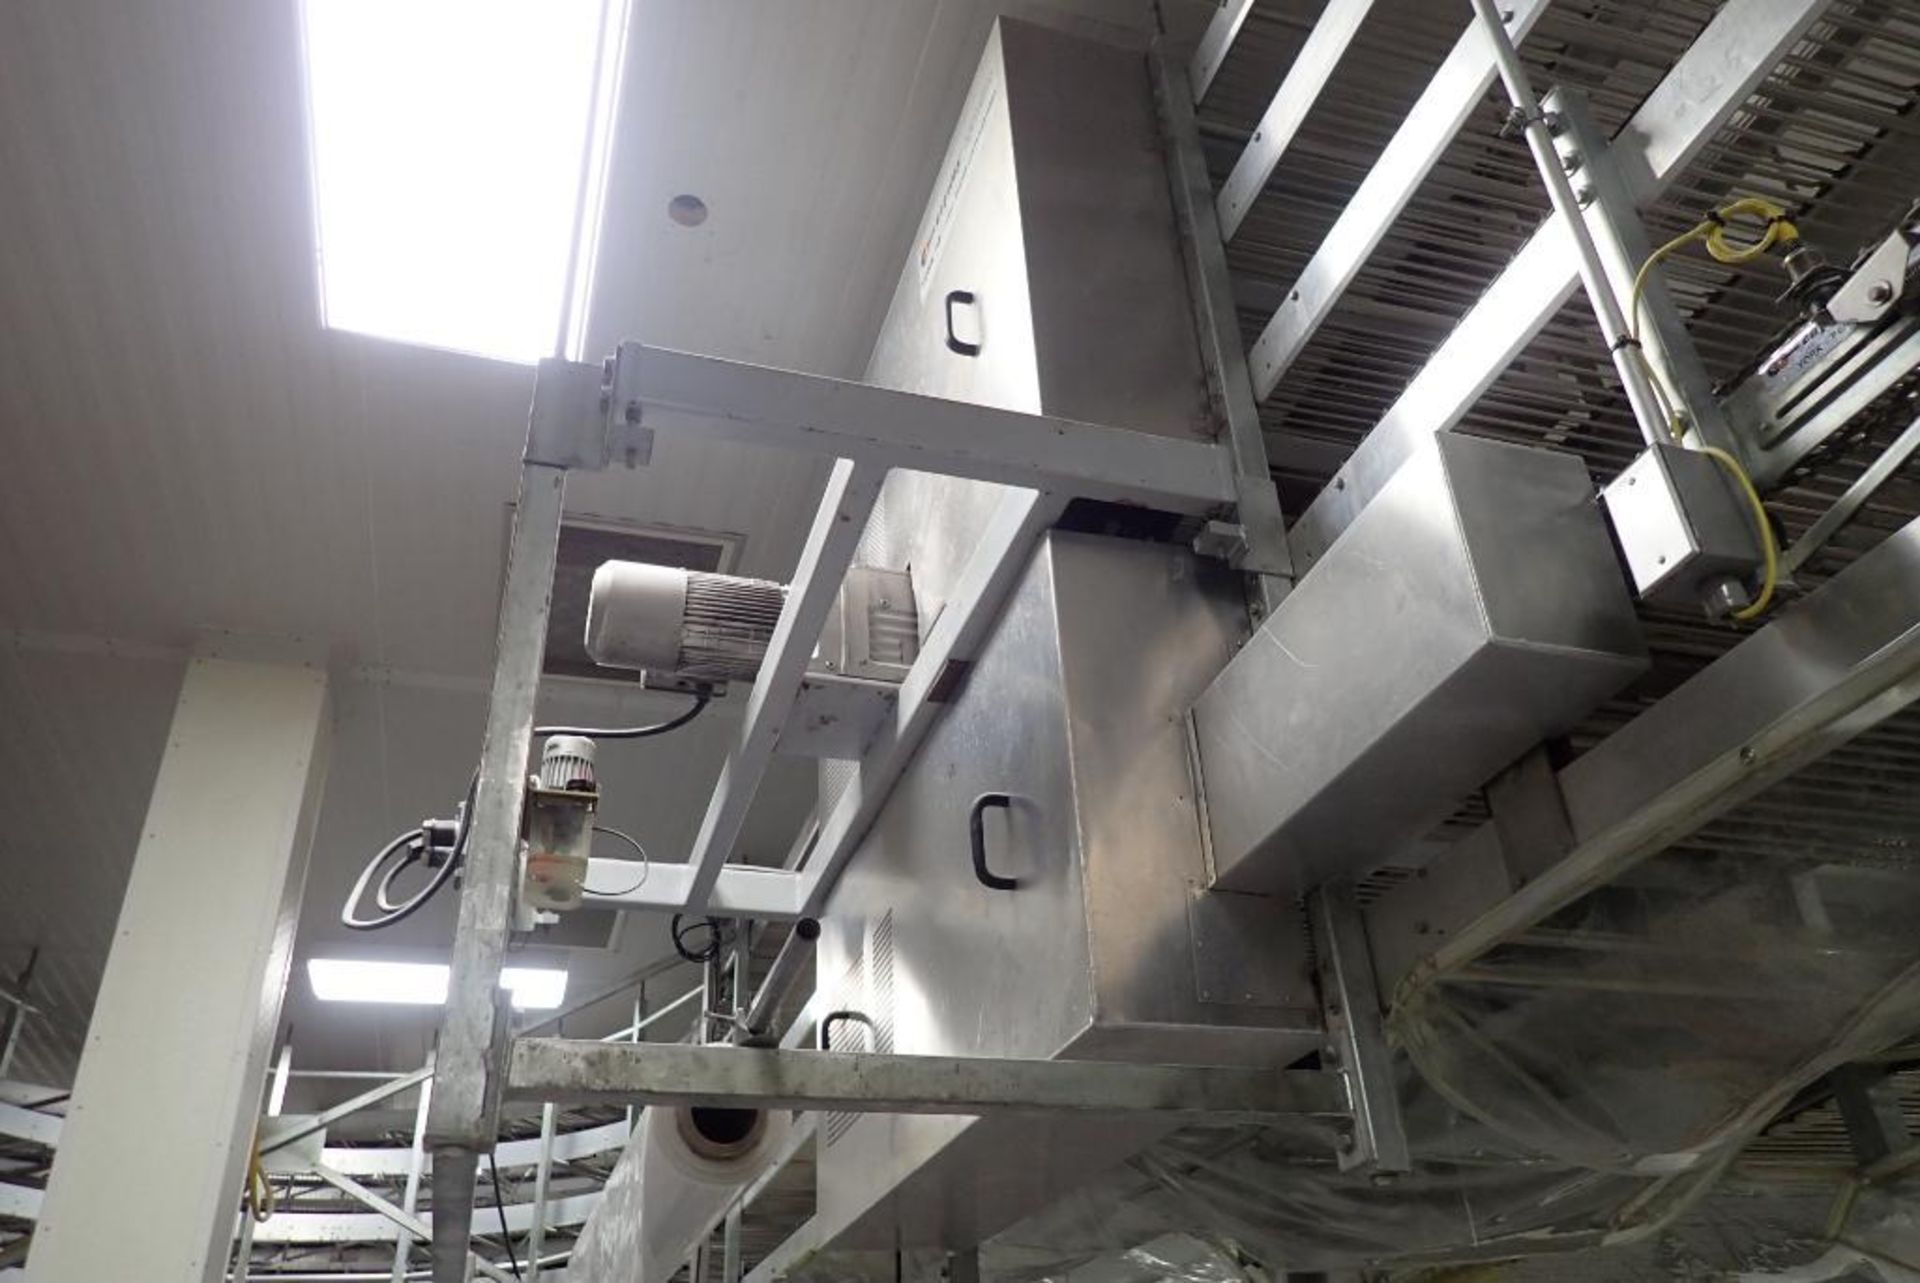 Capway Systems overhead racetrack cooling conveyor - Image 16 of 26